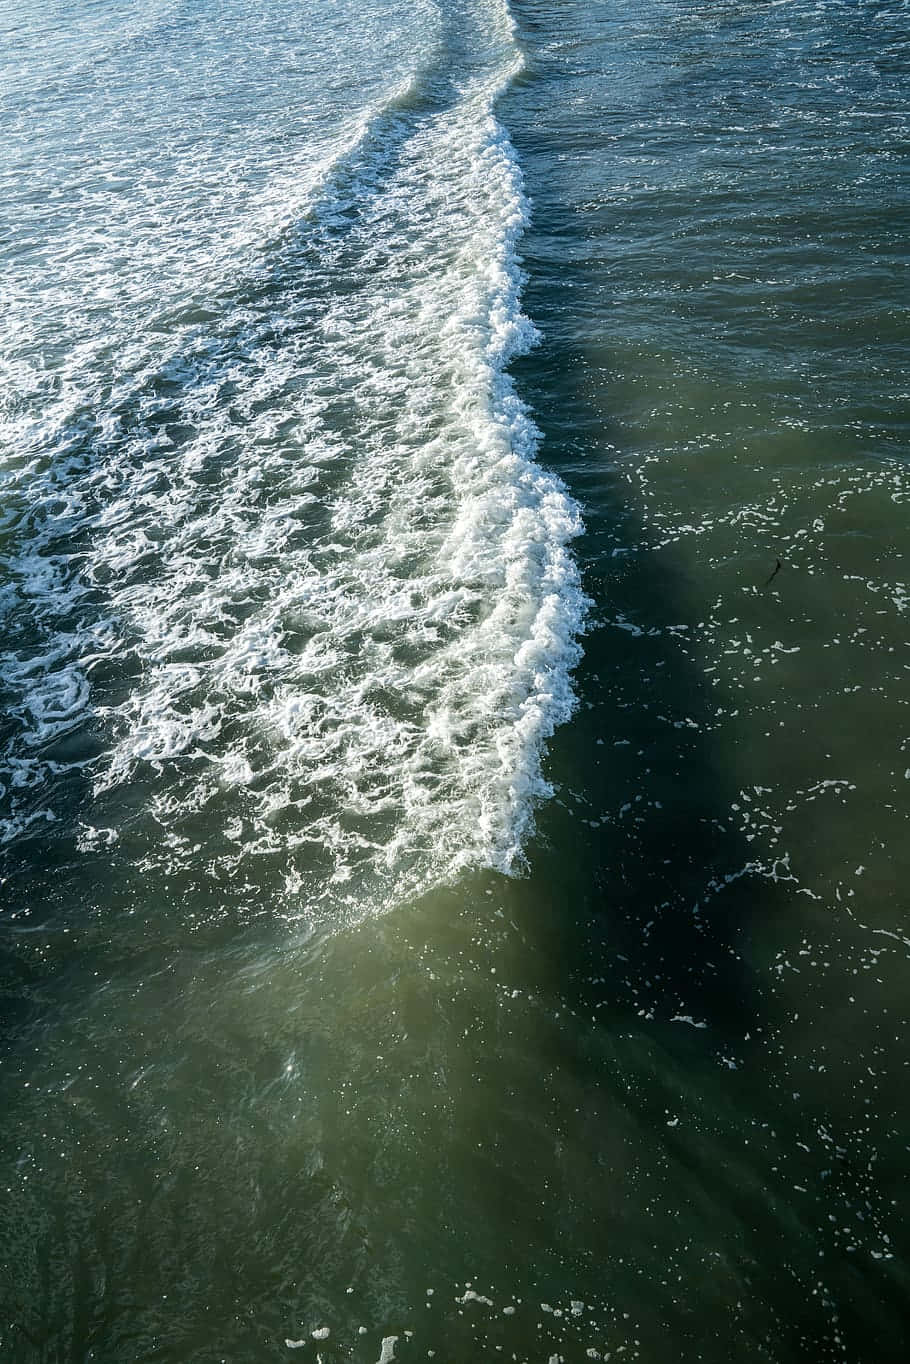 Caption: Majestic Ocean Waves Crashing Wallpaper